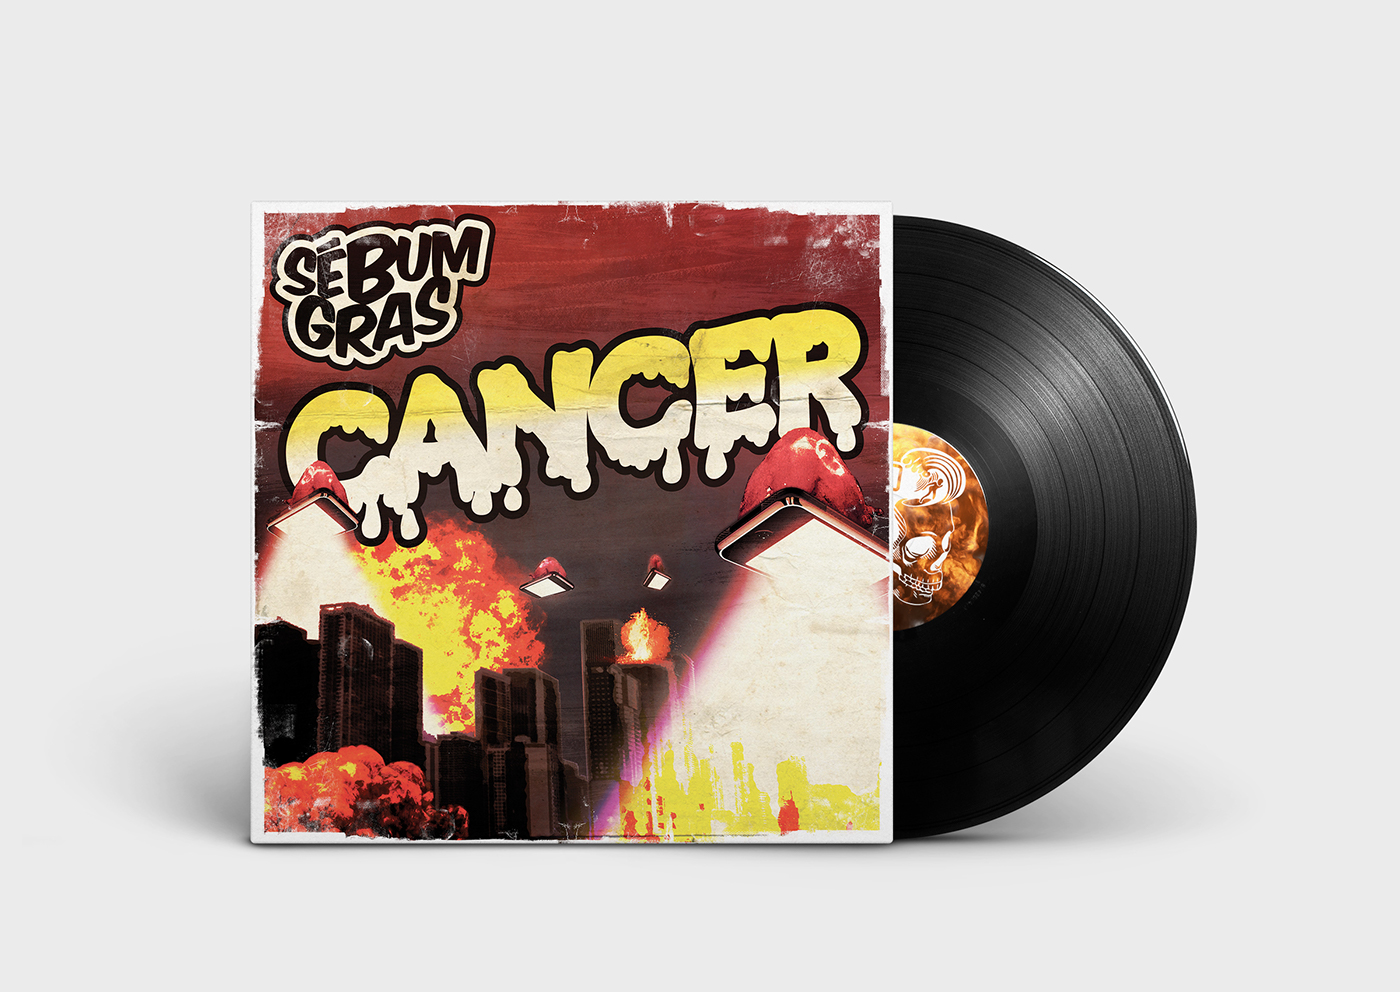 Sébum gras ep logo Musique cancer design vinyl Montreal